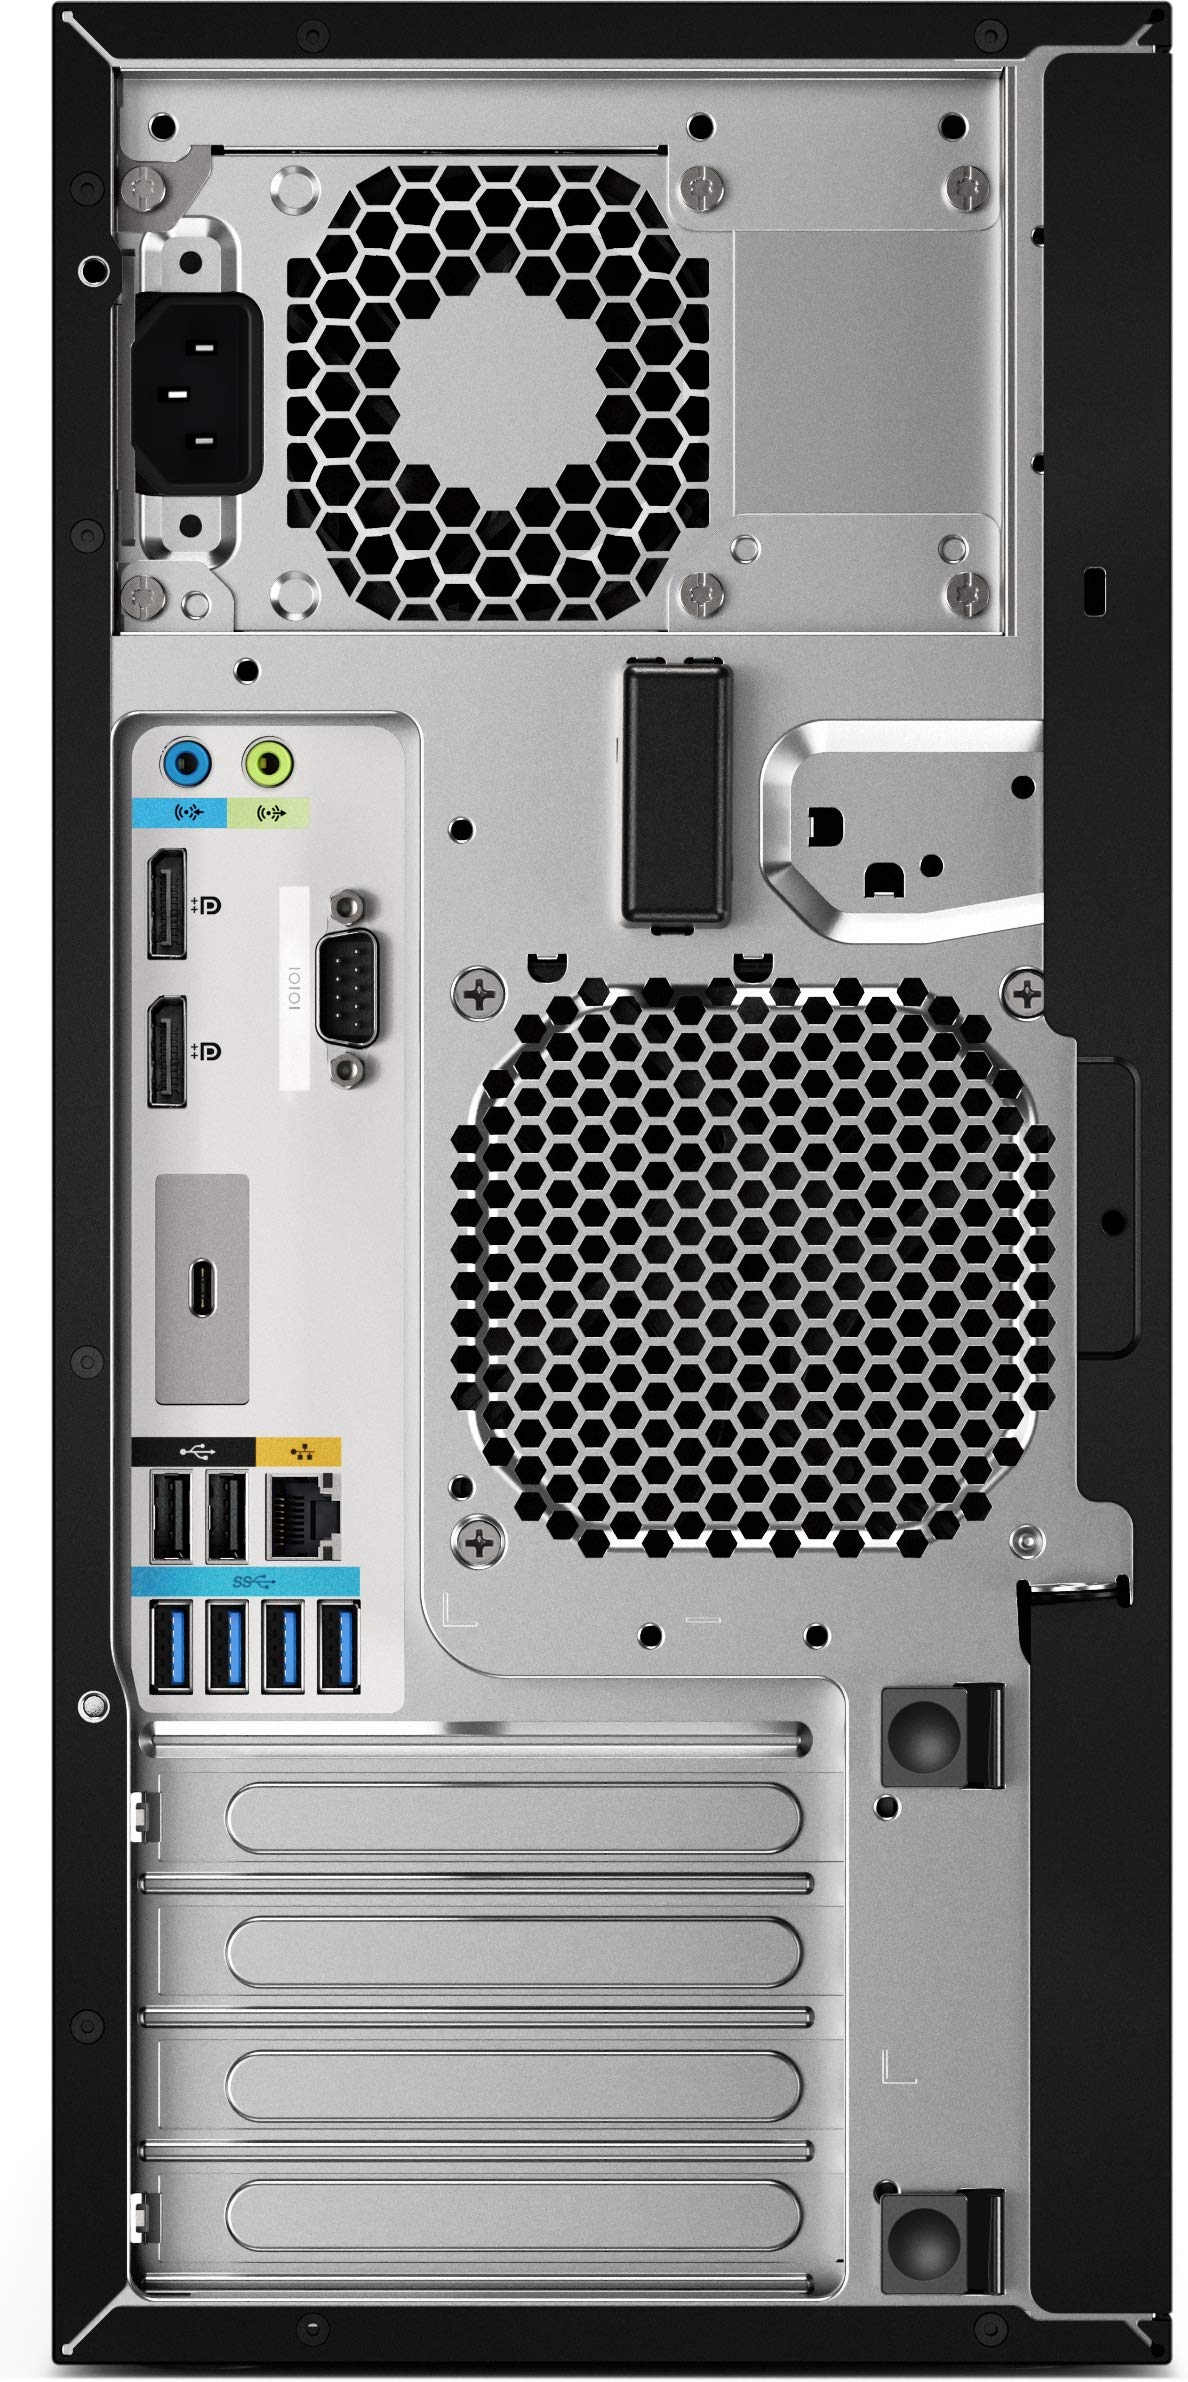 HP Z4 G4 Tower Workstation, 64GB DDR4 RAM, 2TB NVMe SSD + 6TB HDD - i9-10920x (12 Cores, 4.8GHz), Nvidia Quadro RTX 4000 8GB, DVD Writer, Gbit LAN, Windows 11 Pro (Renewed)